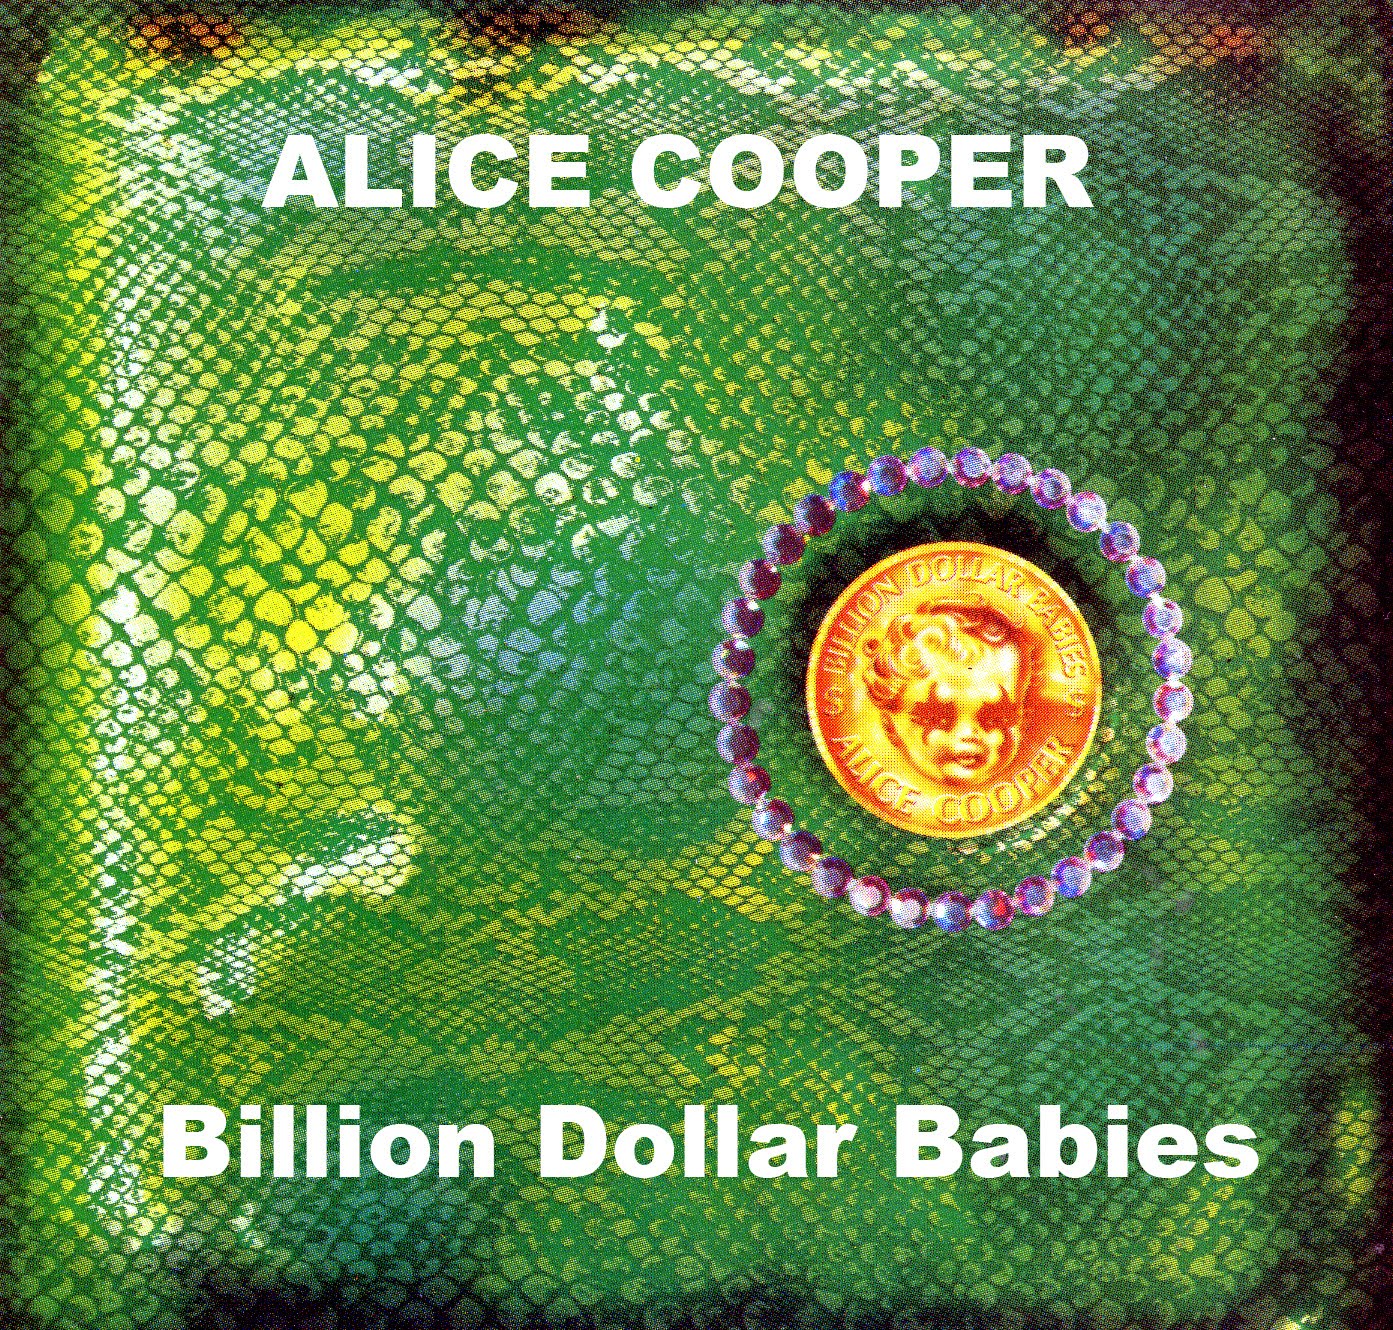 Alice Cooper - Billion Dollar Babies from Alice Cooper